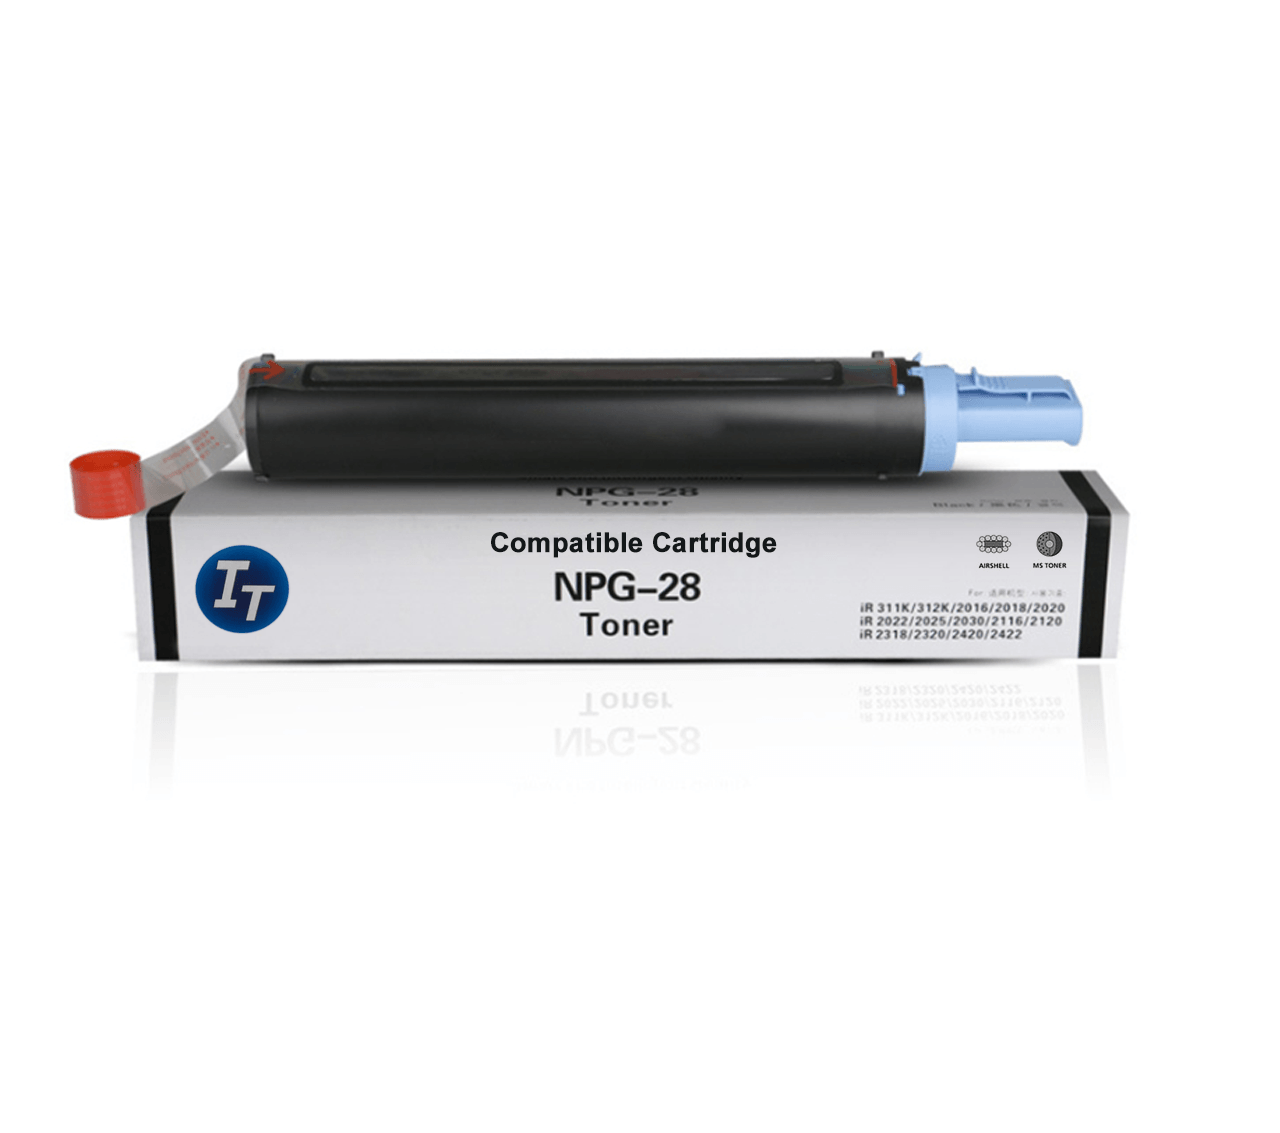 IT Toner Compatible Cartridge NPG-28 (3).png